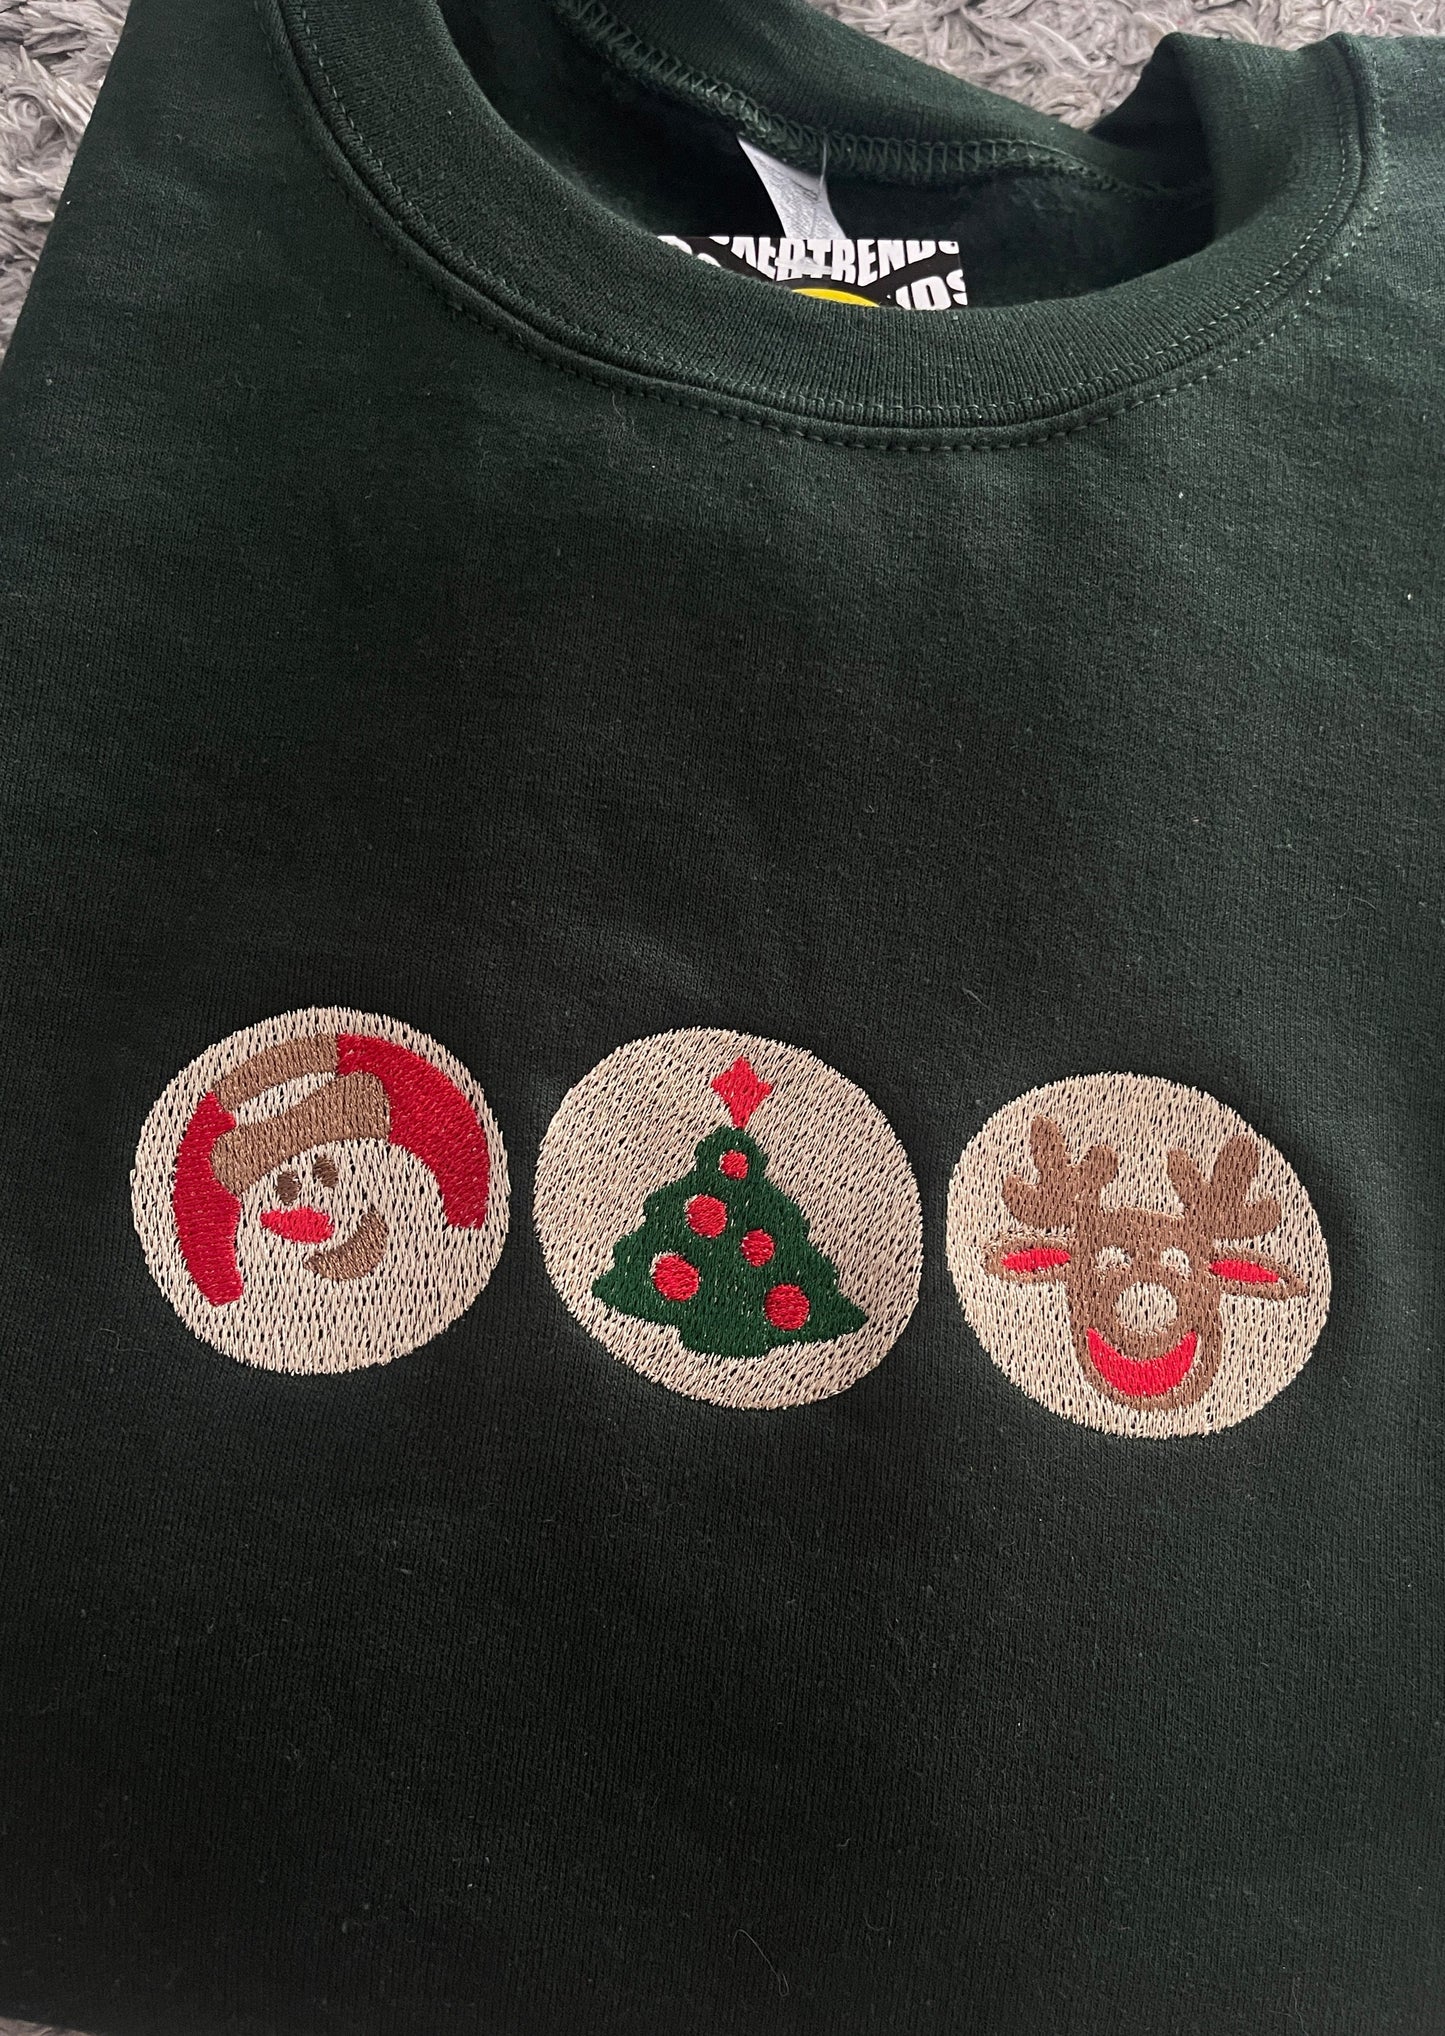 Nostalgic Christmas Cookies Embroidery